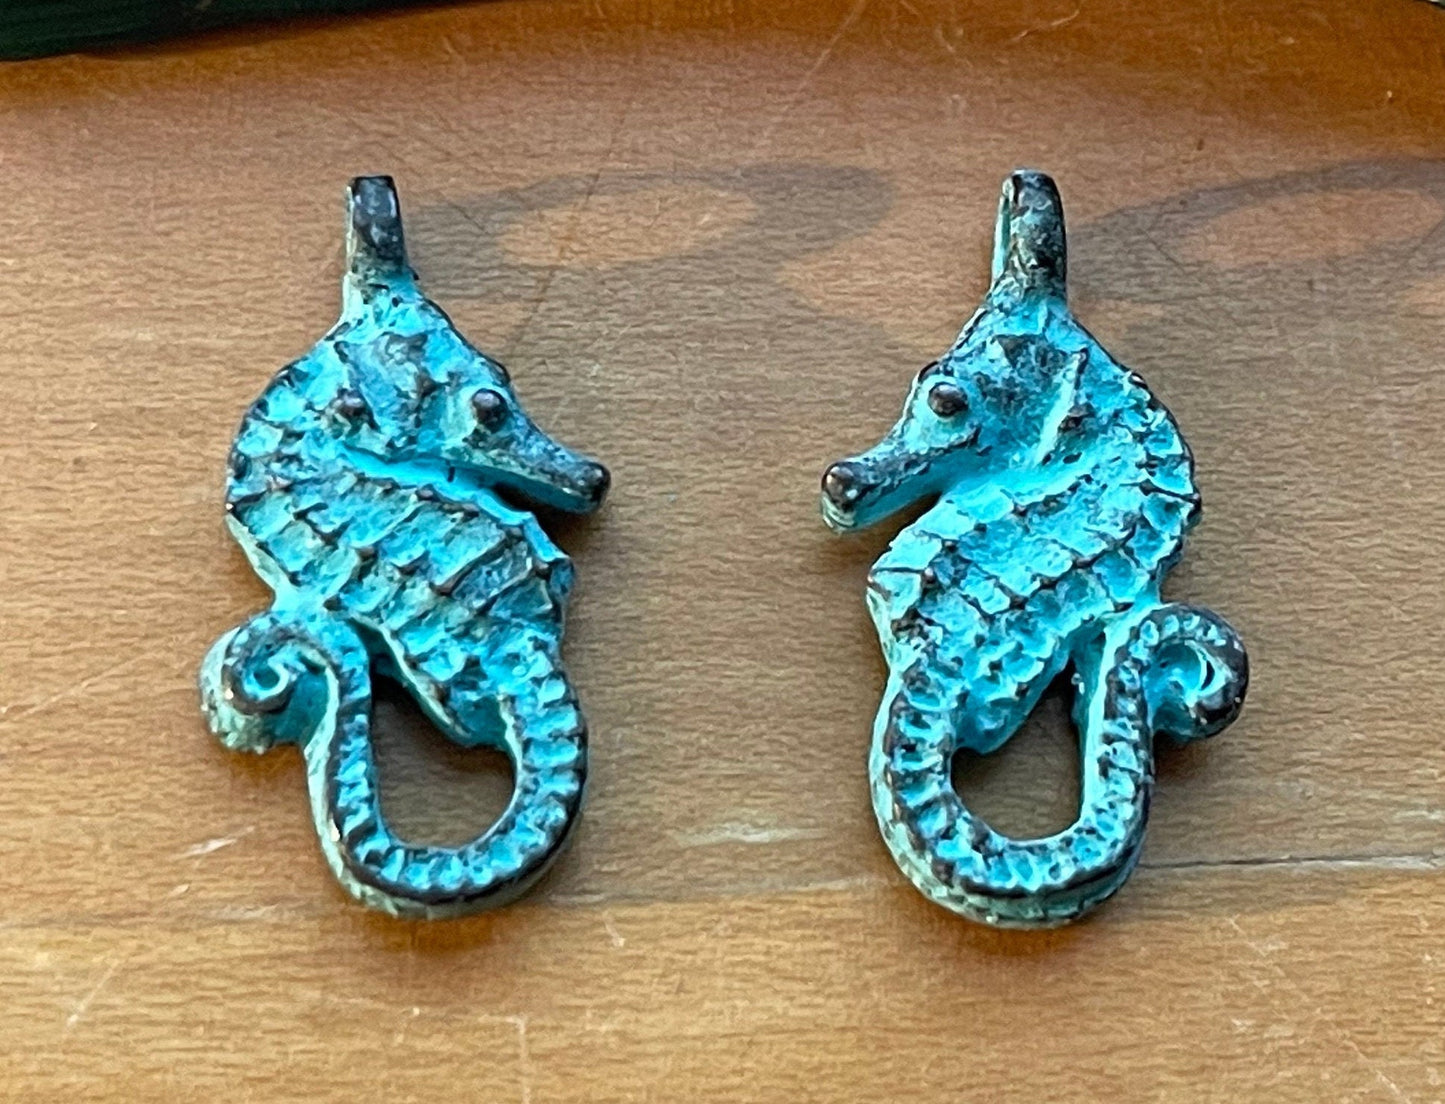 Seahorse copper charm or pendant (3D) –choose 1, 3 or 6 – green patina PREMIUM quality from Mykonos island, Greece – beach nautical sea life